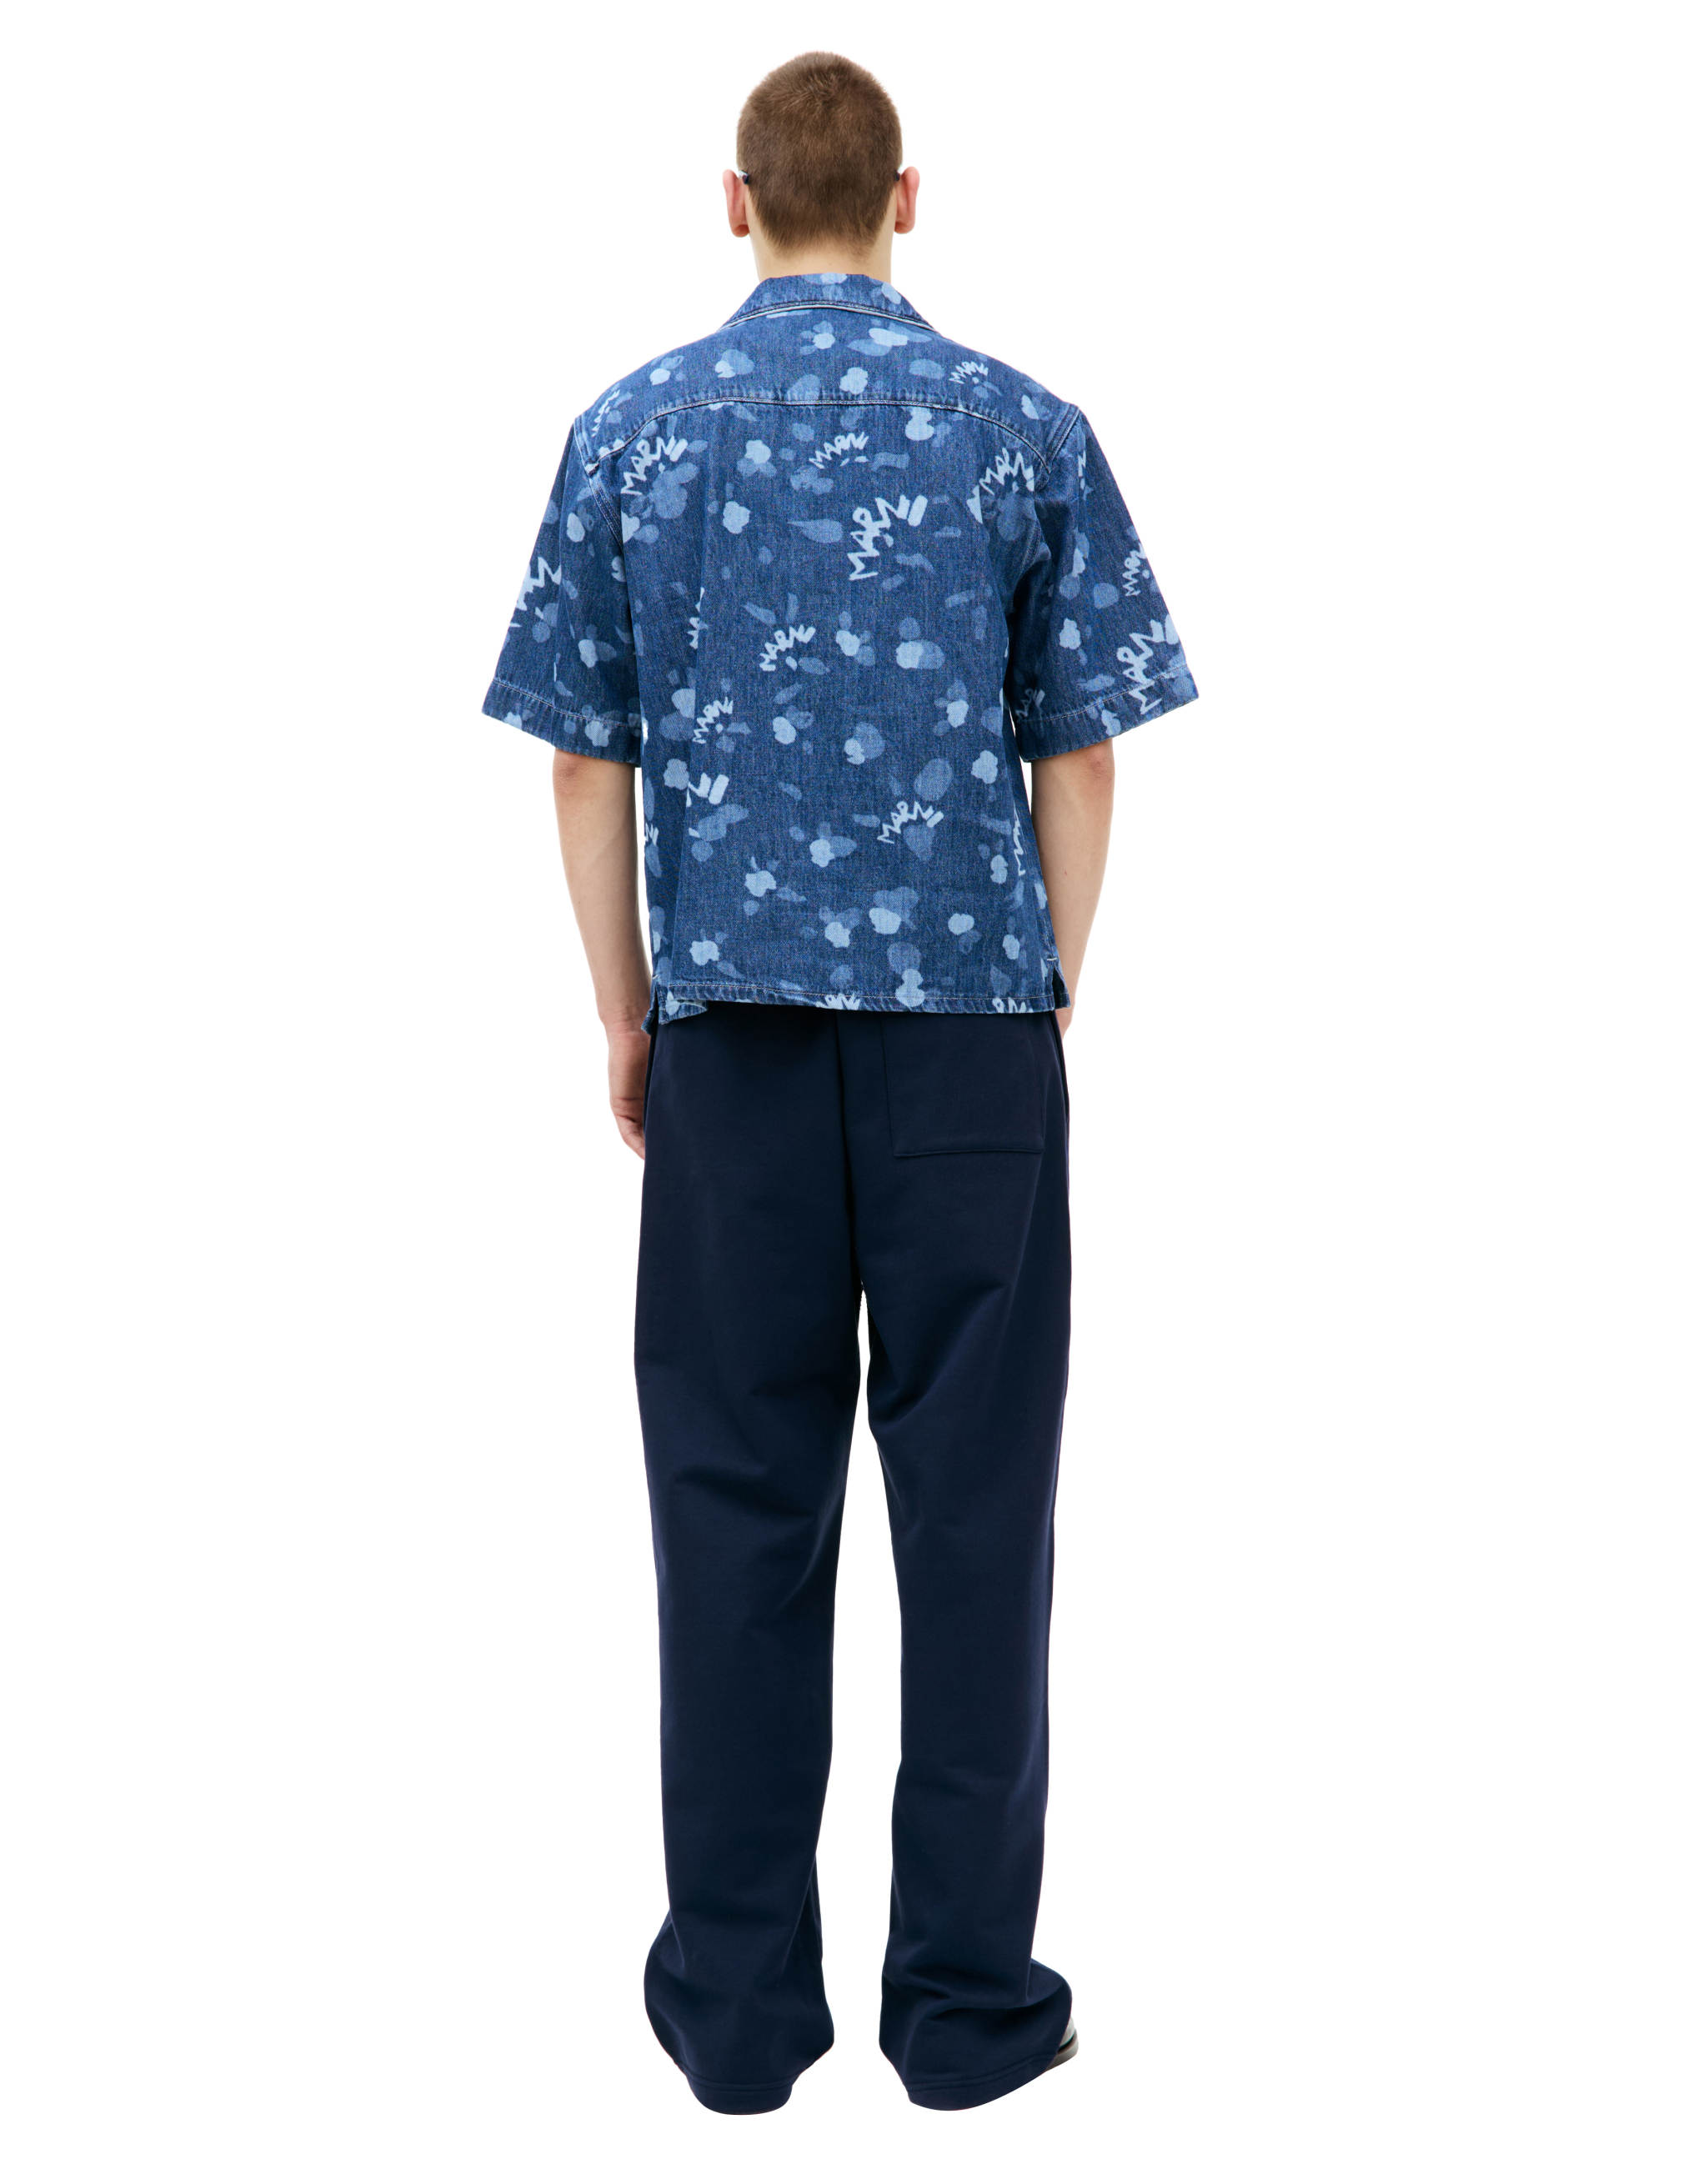 Джинсовая рубашка с коротким рукавом Marni CUJU0017I1/USCW08/MDB50, размер 48;52 CUJU0017I1/USCW08/MDB50 - фото 3